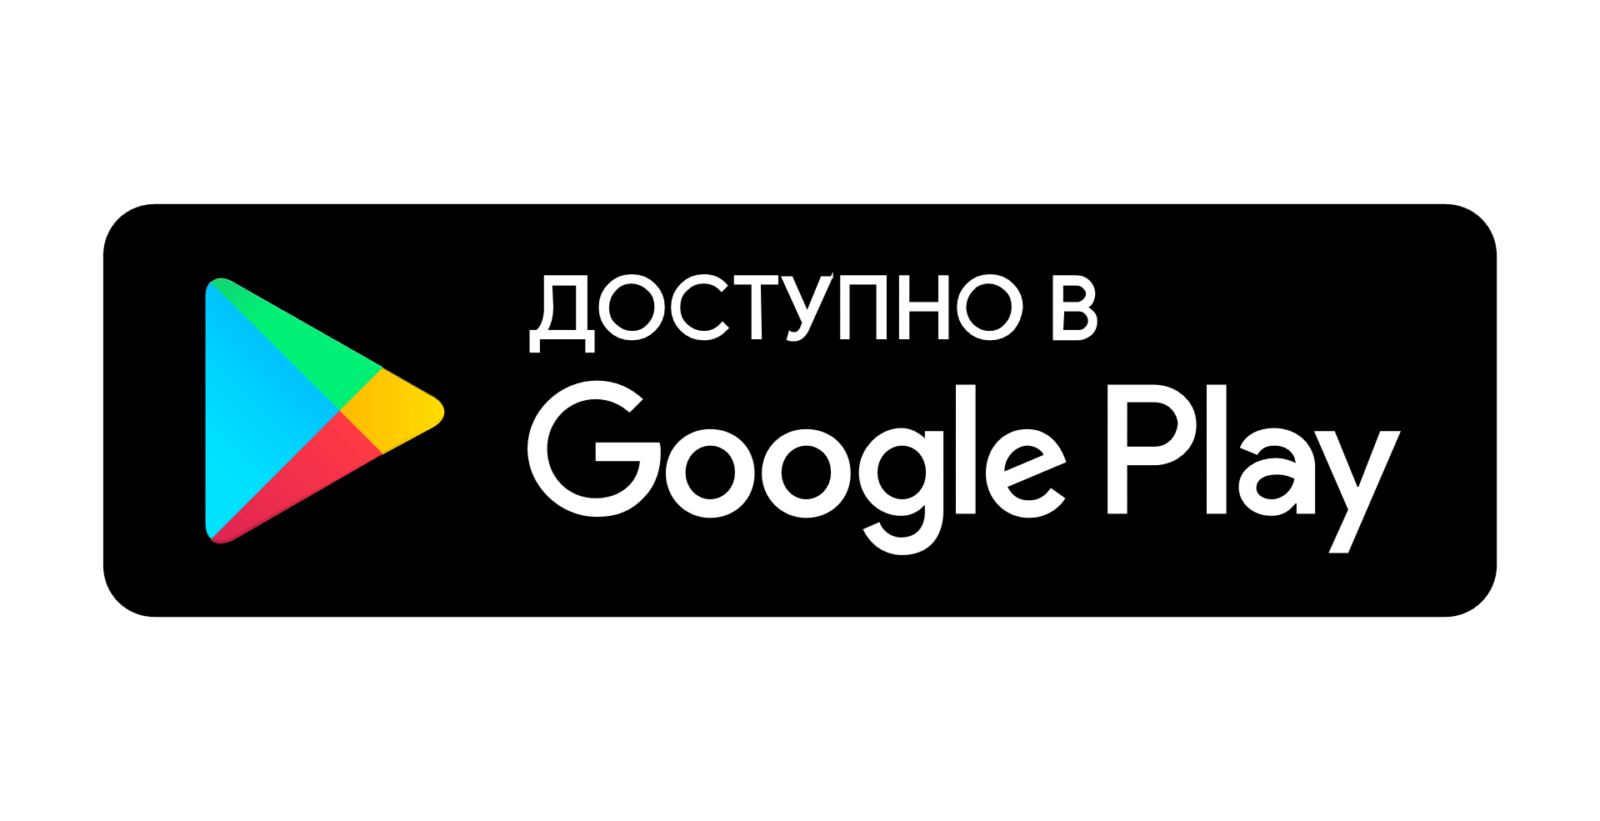 Гугл плей. Логотип Google Play. Доступно в гугл плей. Доступно в гугл плей иконка. Гугл маркет на телевизор